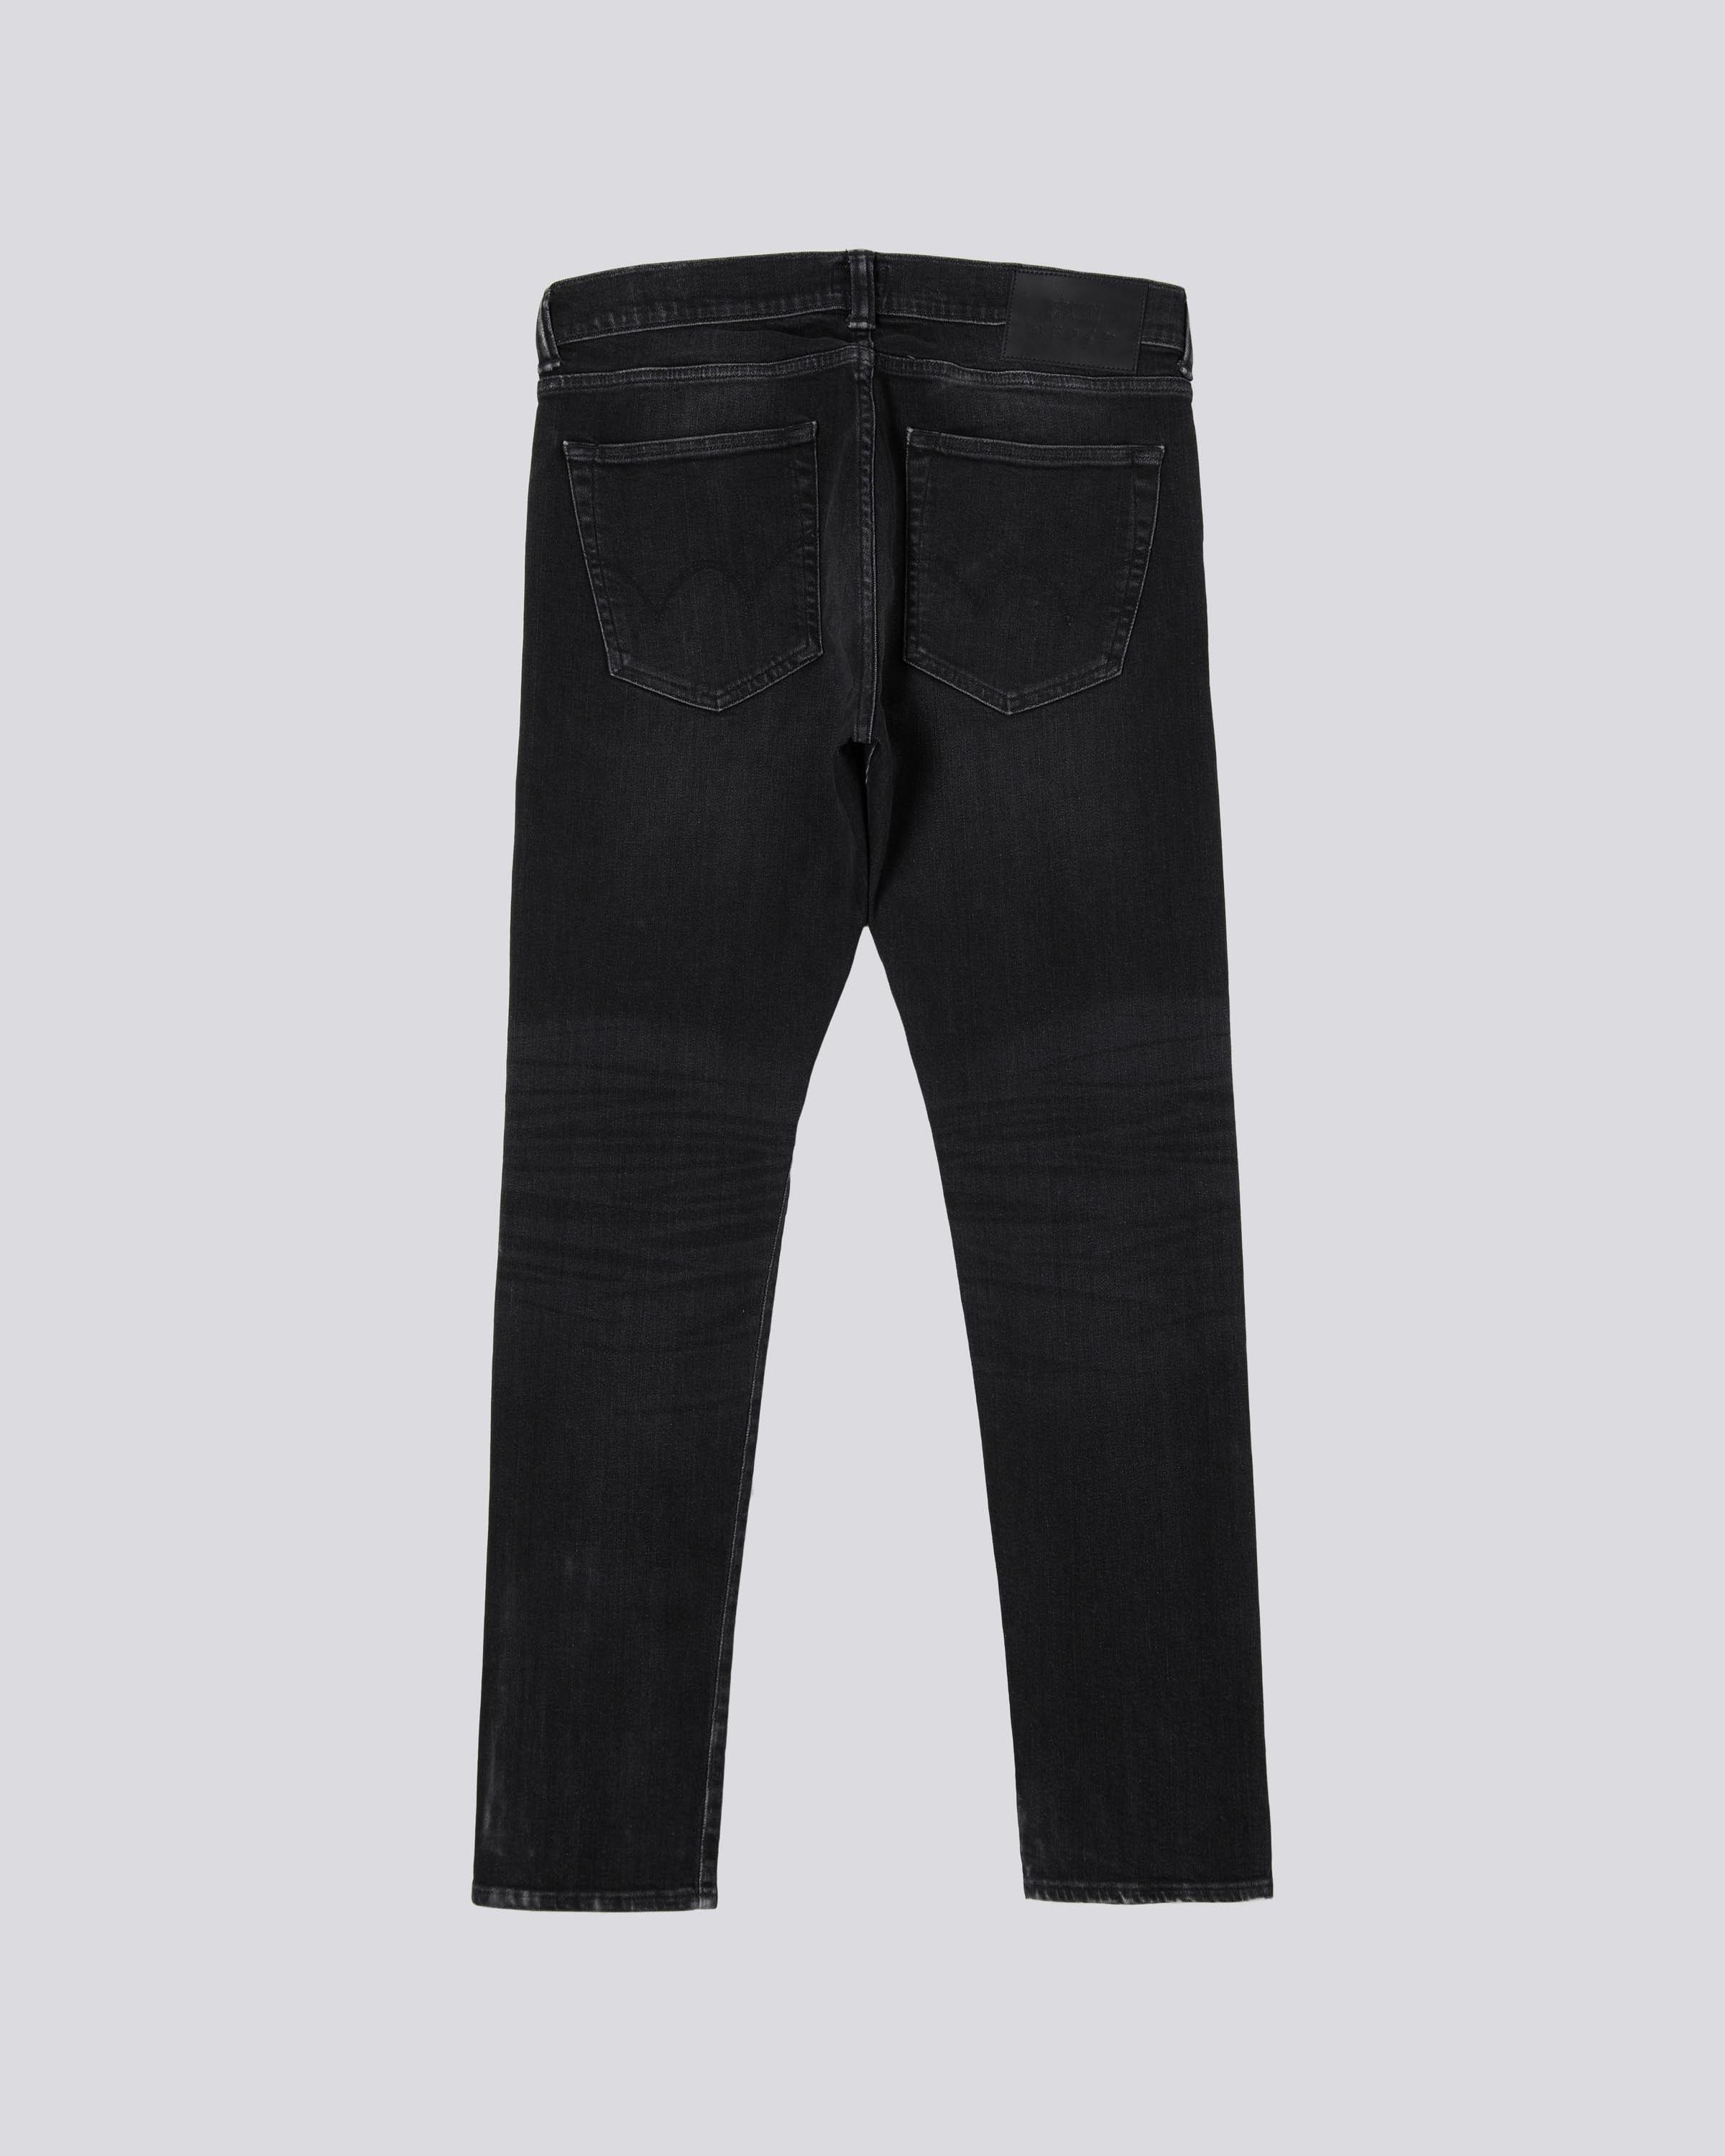 black plaid trousers